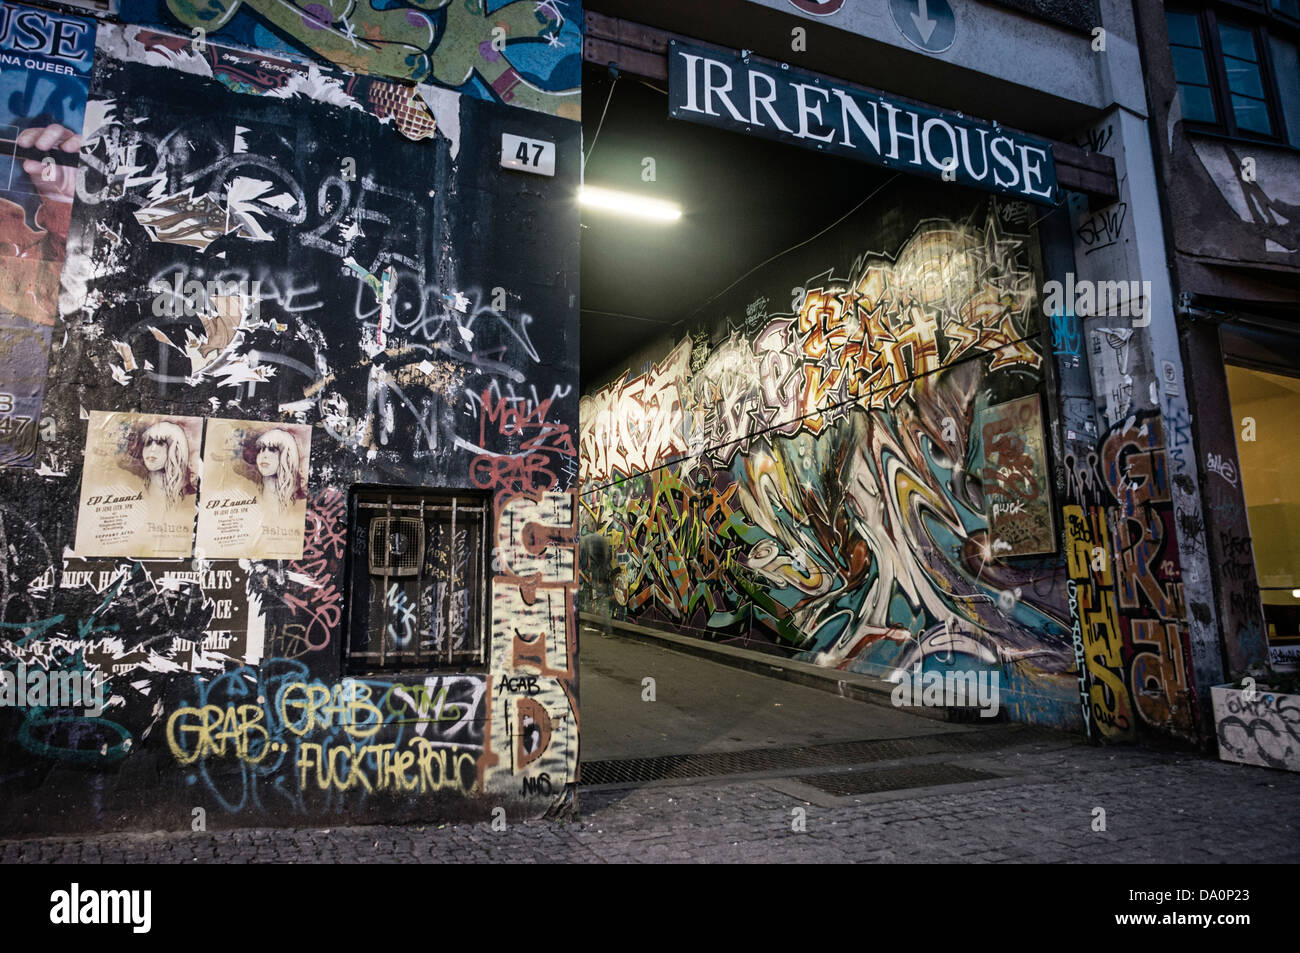 Eingang zum Irrenhouse, Graffiti, Kreuzberg, Comet Club, Berlin Stockfoto